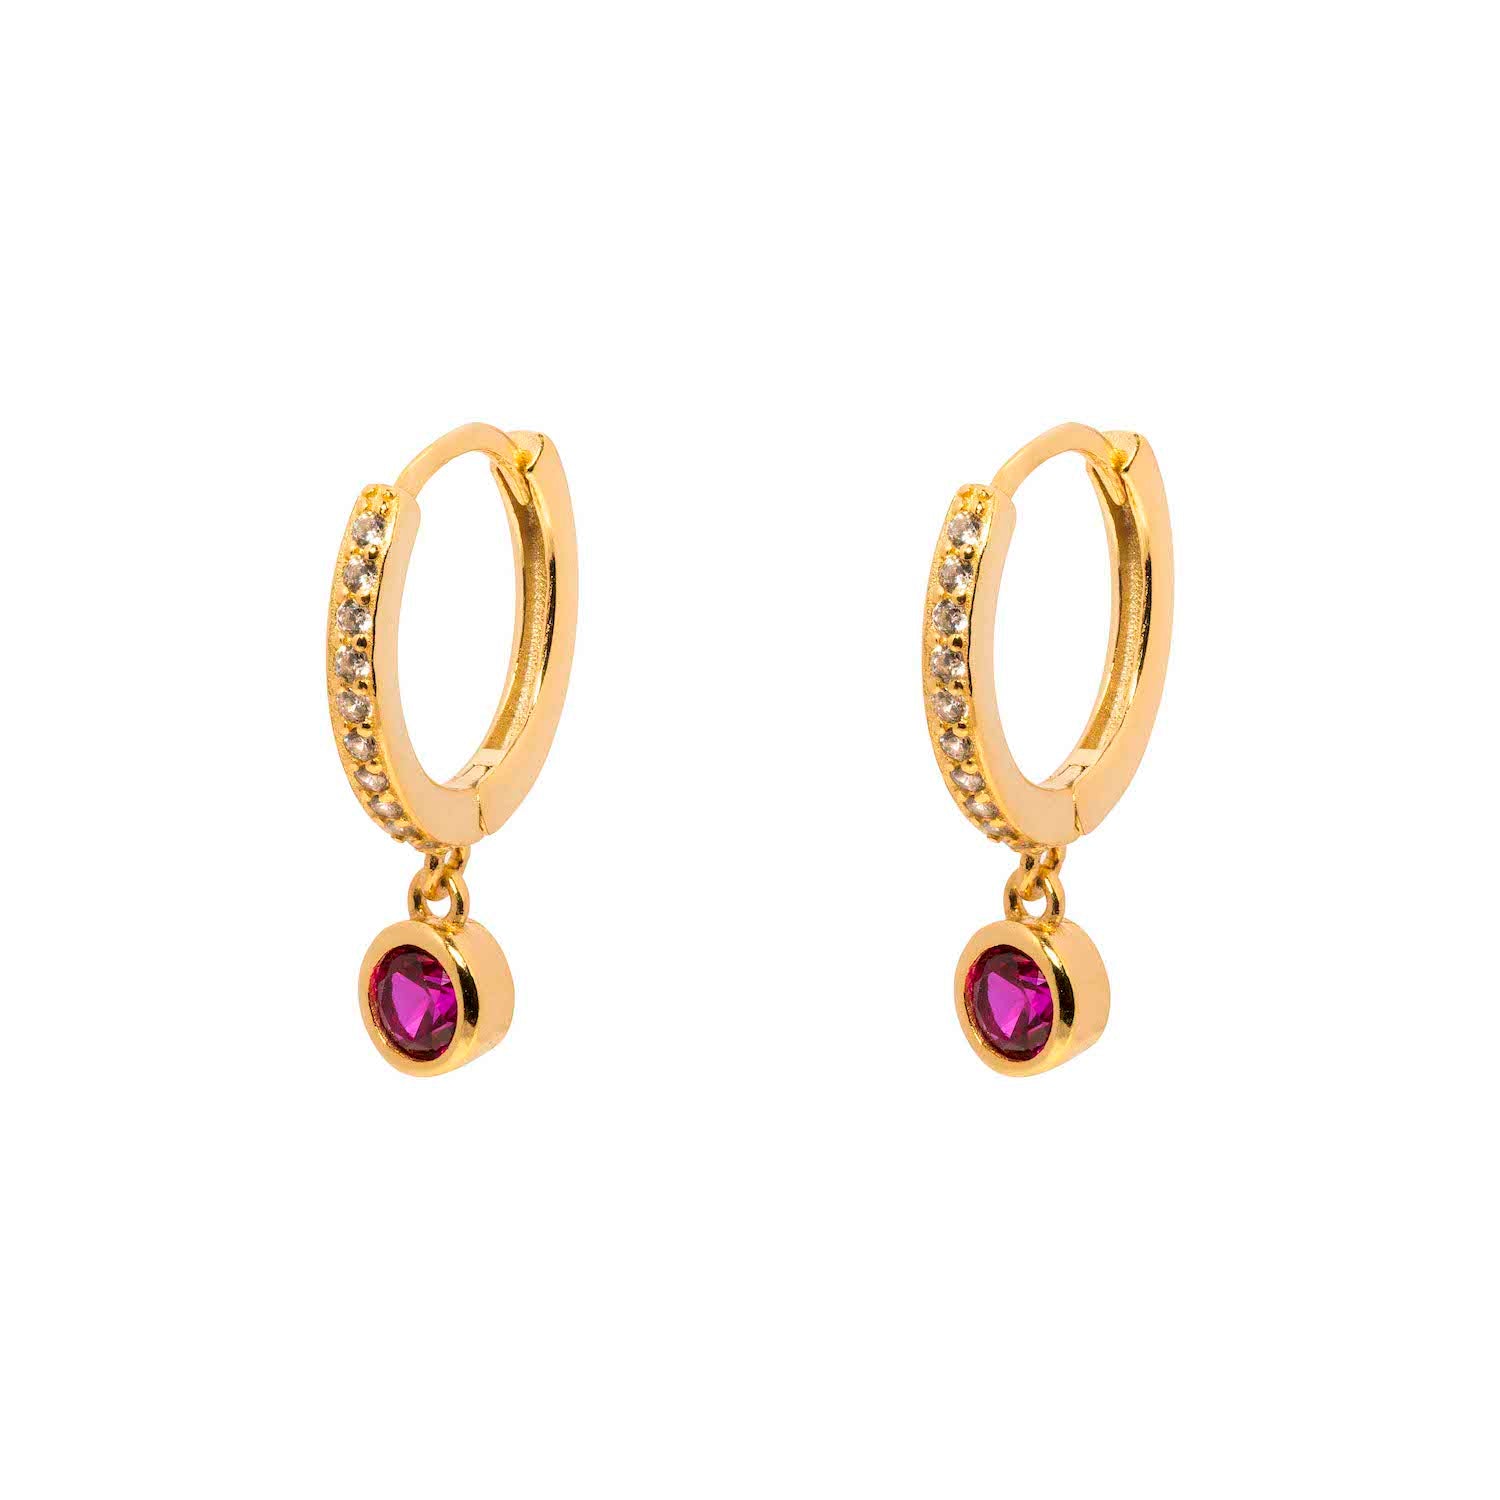 Duo Jewellery Earrings Yellow Gold / Blue Hoop With Stone Charm Earrings